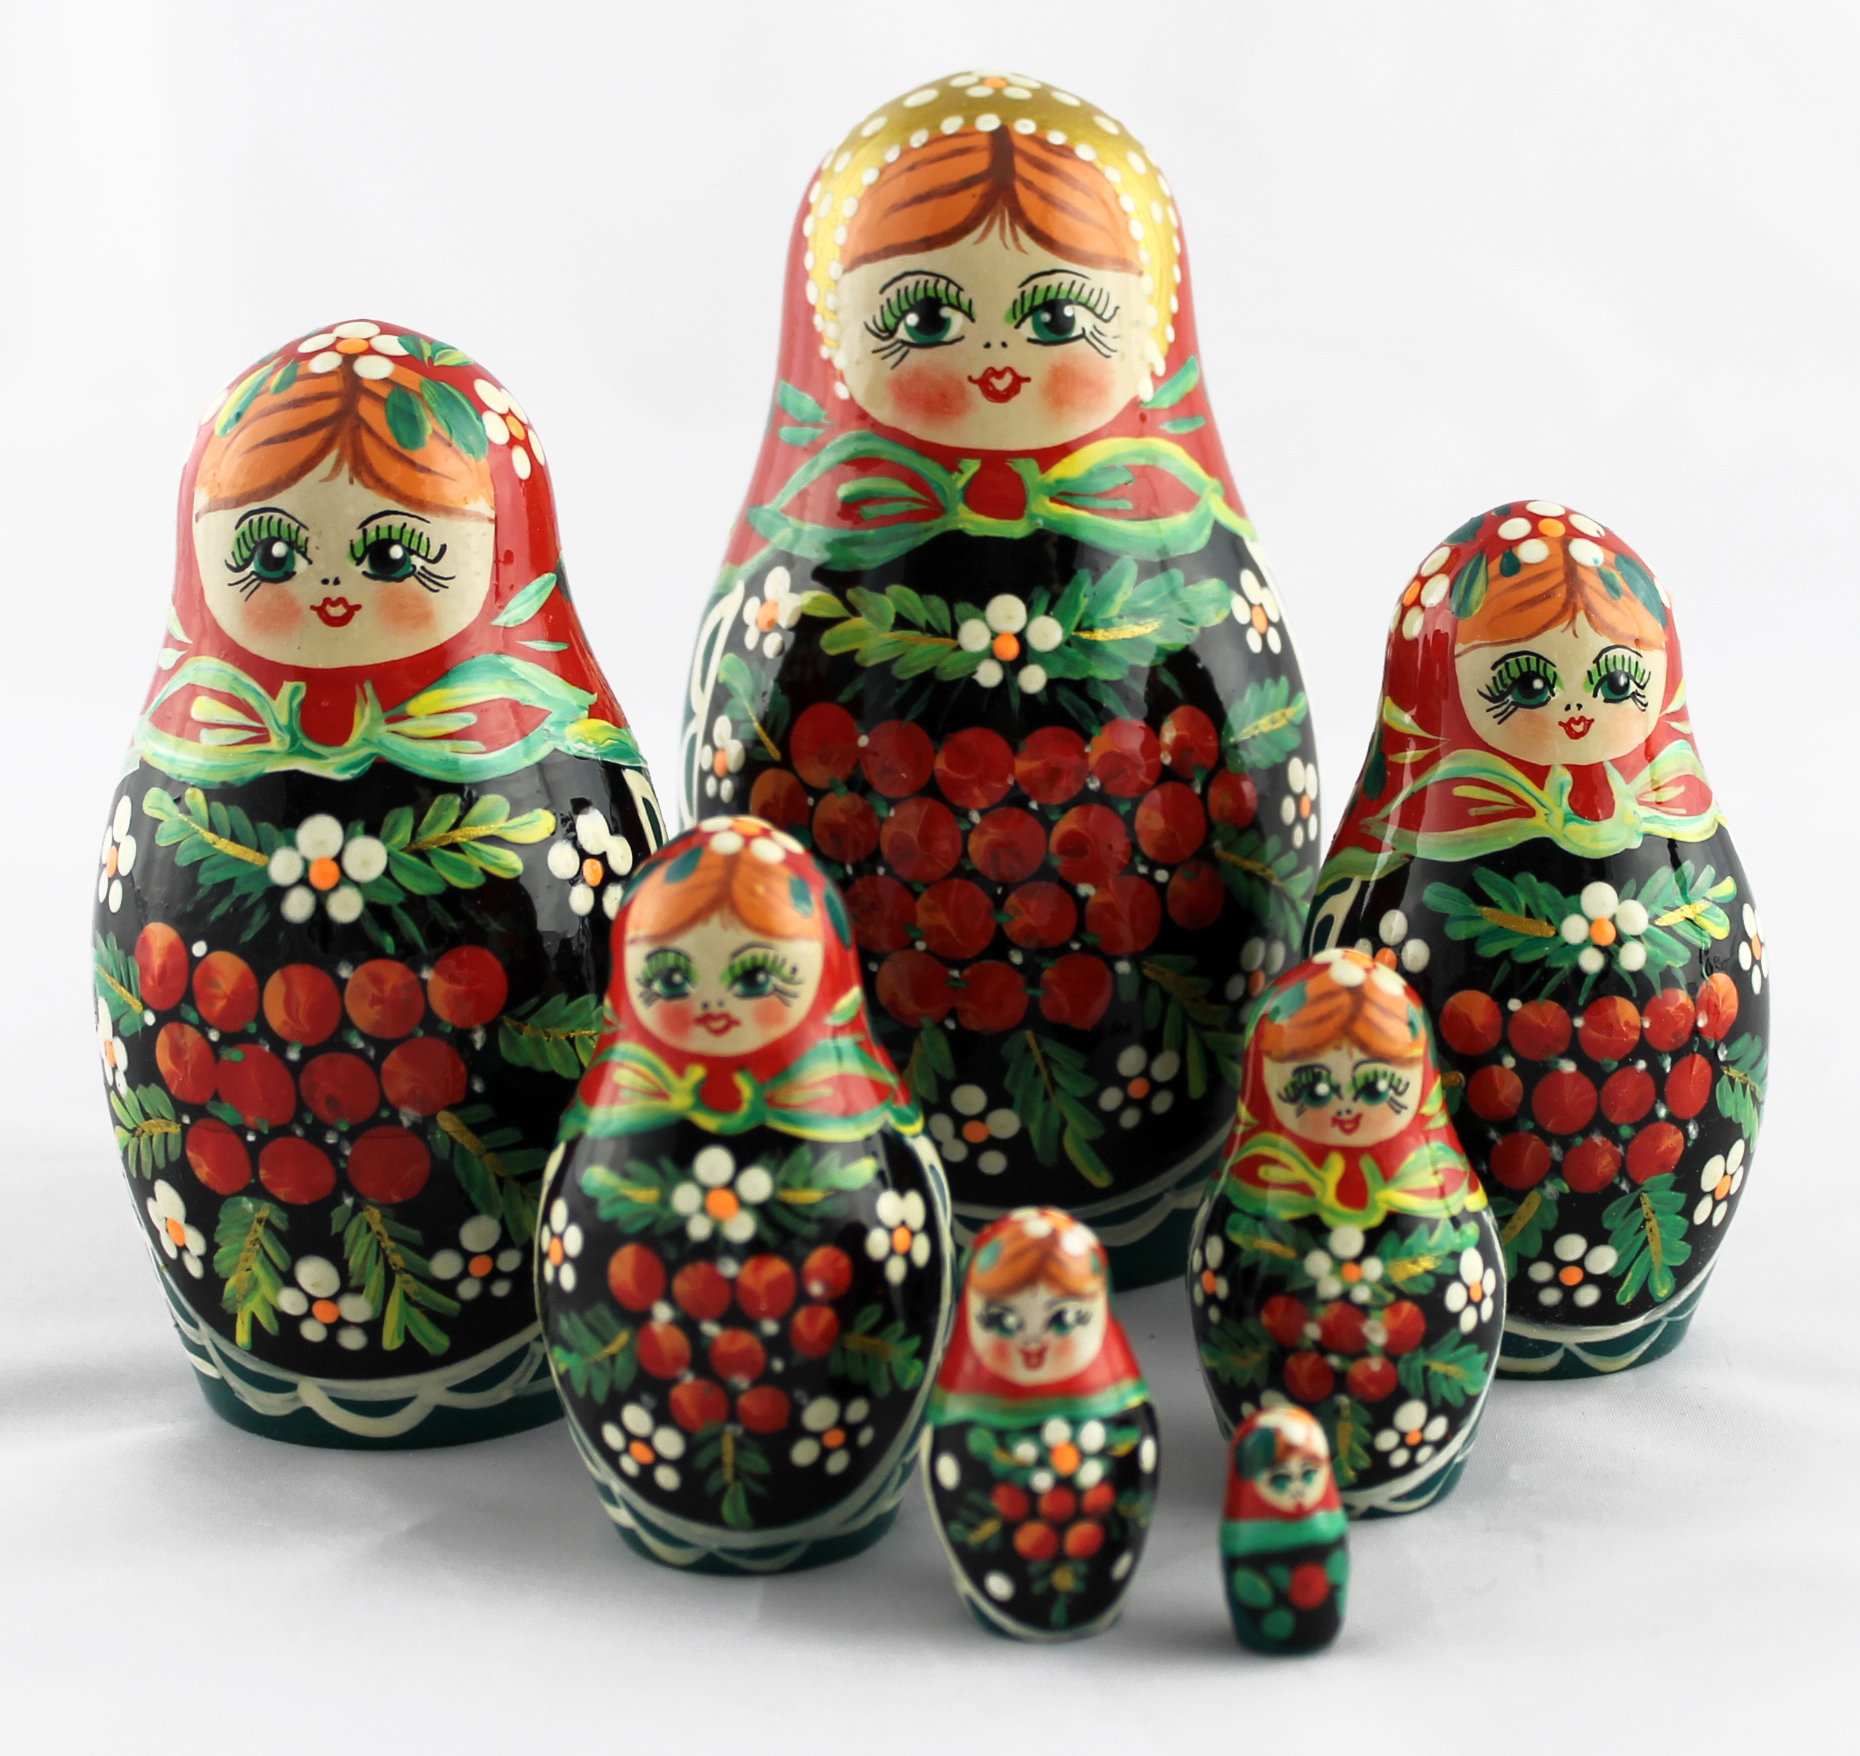 Traditional Russian Nesting Dolls | Rowan Nesting Dolls for Kids ...